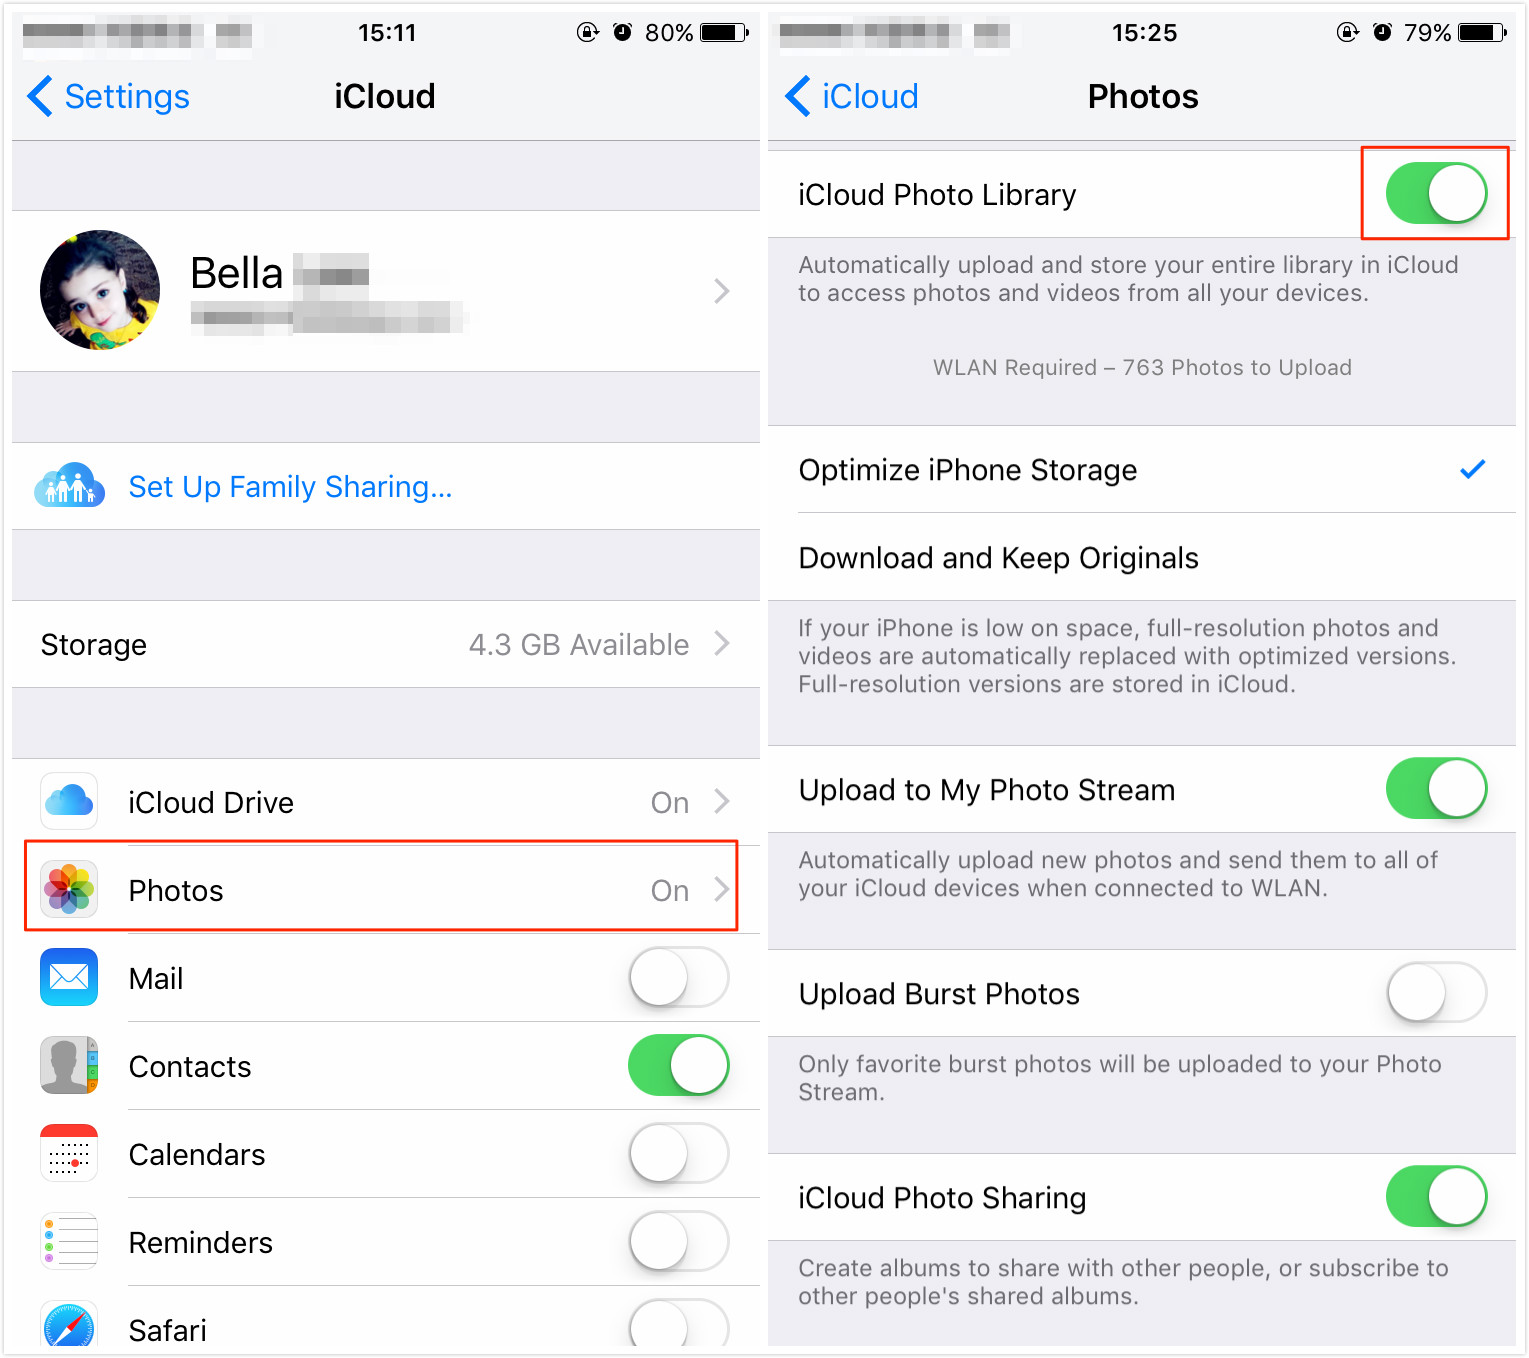 How to View iCloud Photos on iPhone/iPad/iPod